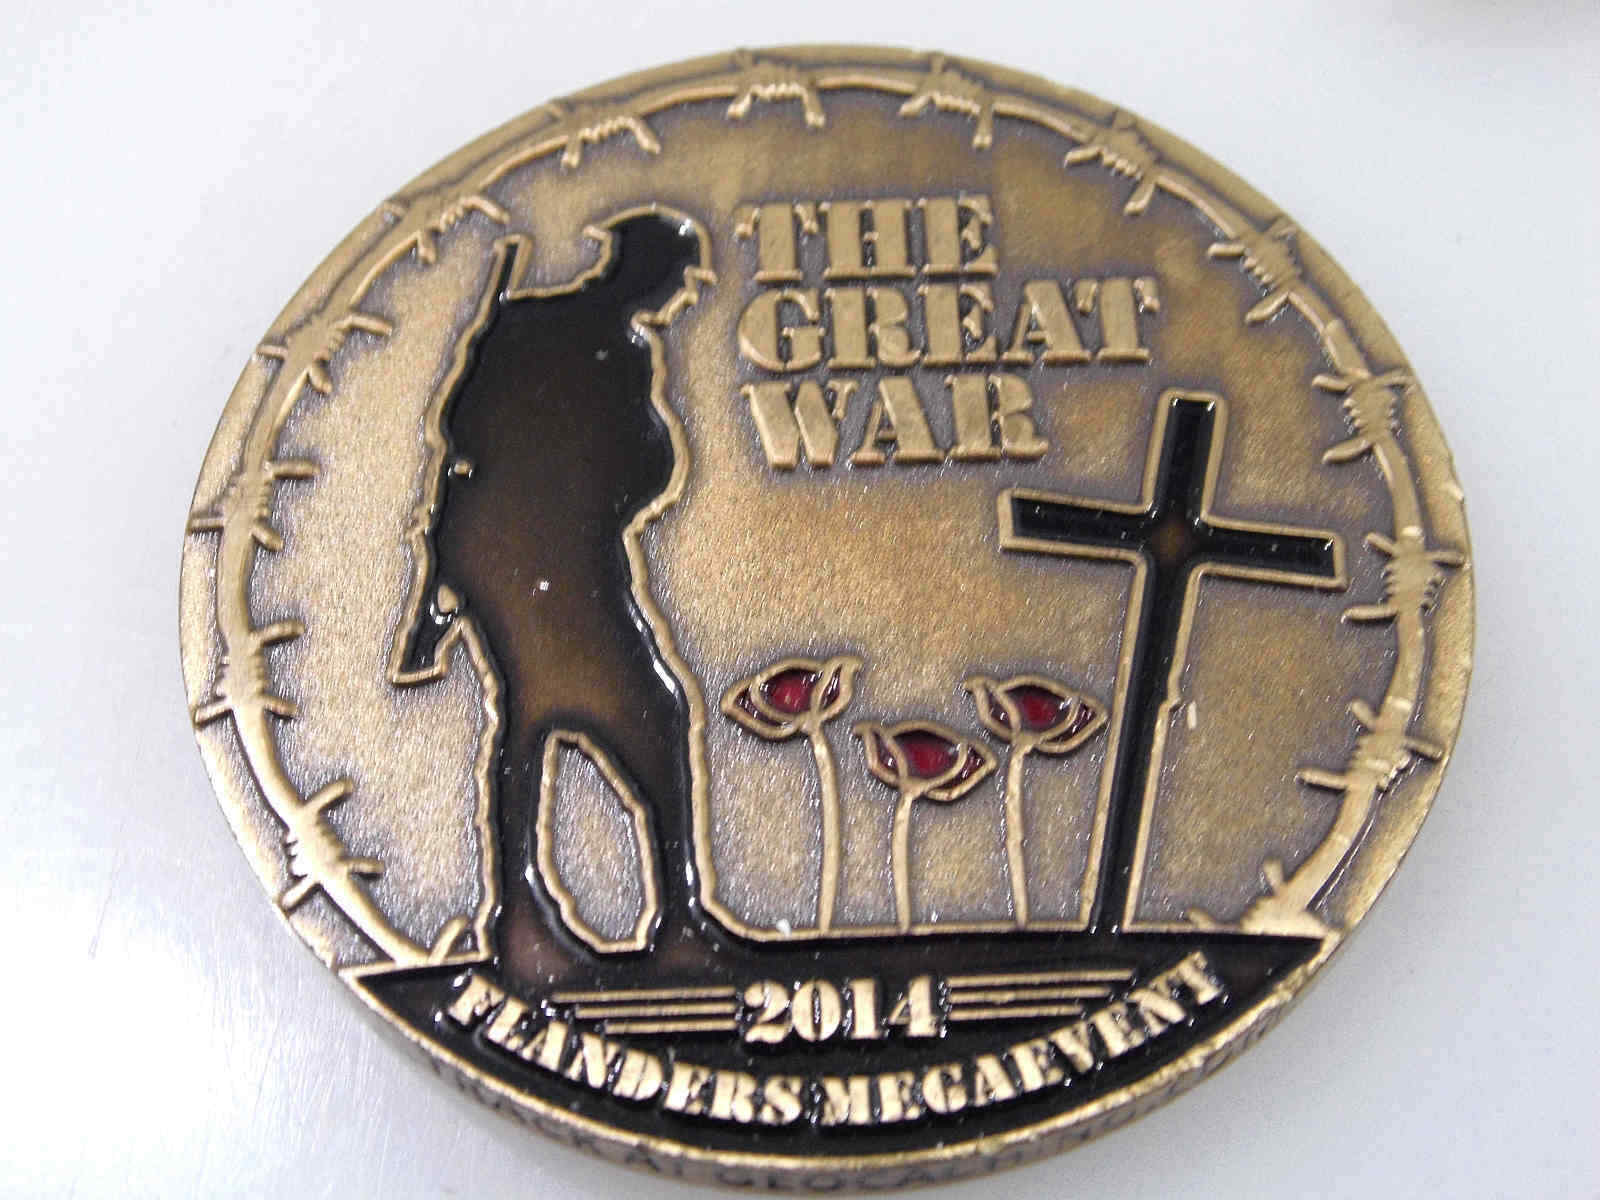 GREAT WAR 2014 FLANDERS MECAEVENT CHALLENGE COIN